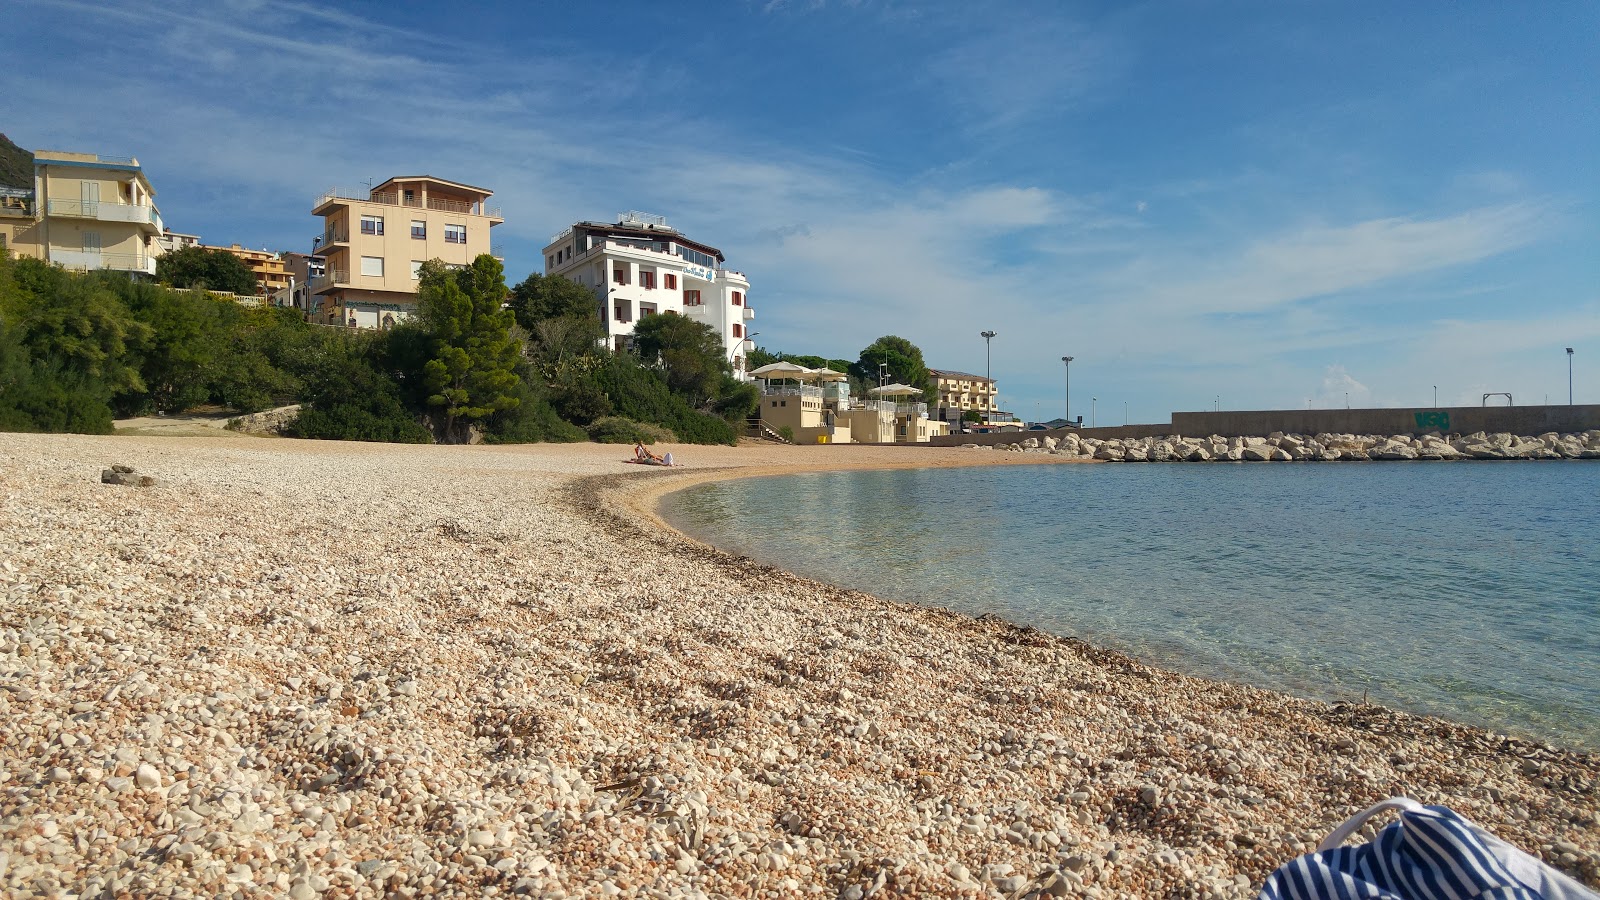 Valokuva Spiaggia Di Cala Gononeista. ja asutus